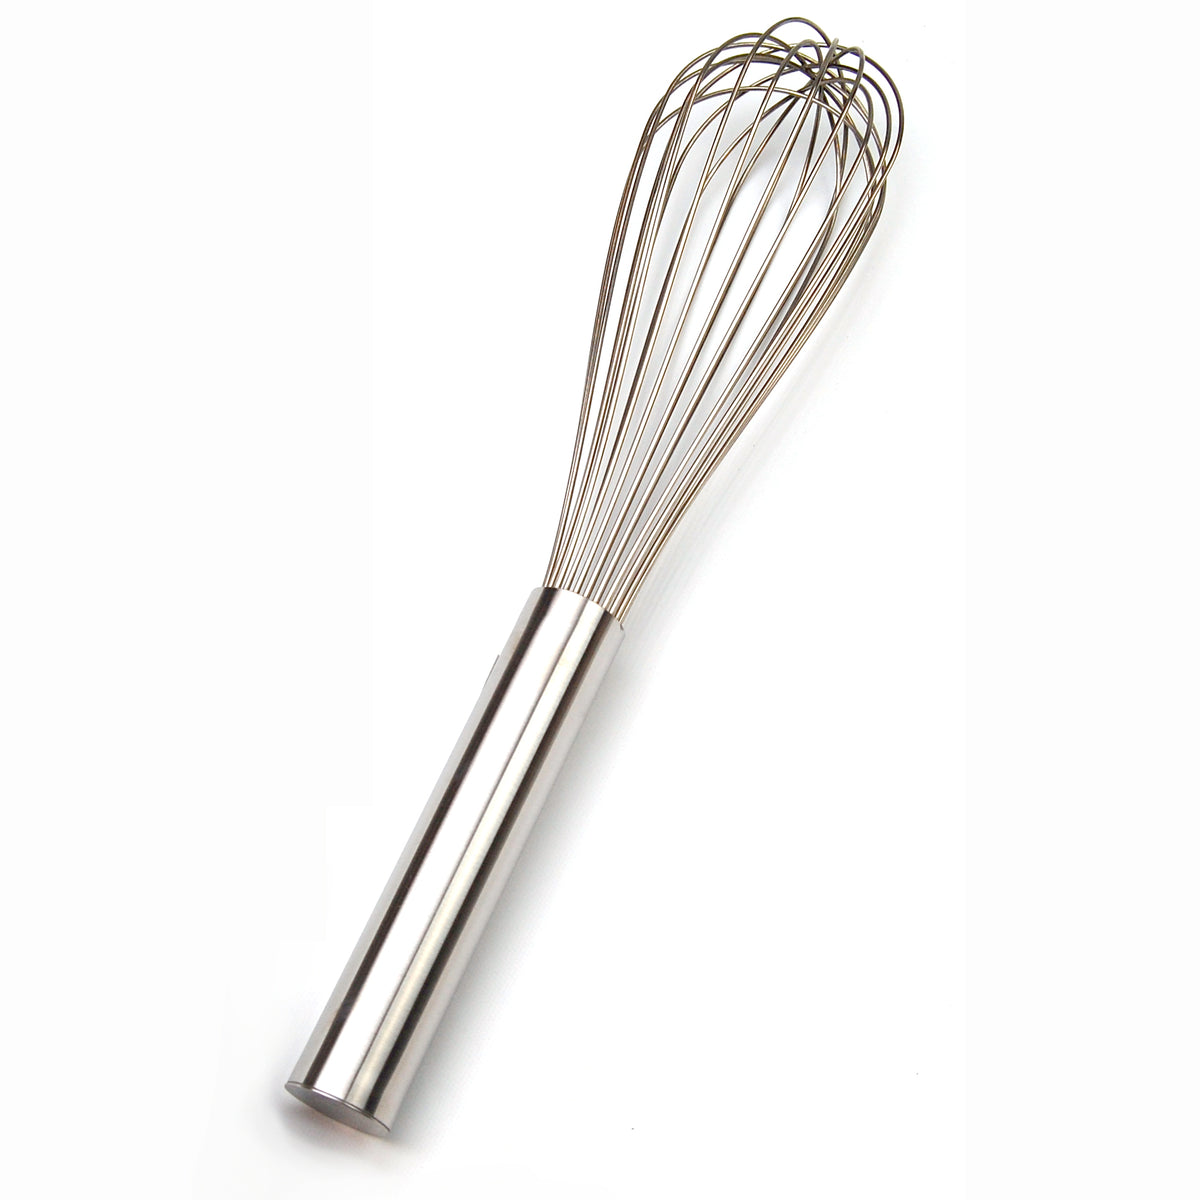 Dasbsug Stainless Steel Wisk Kitchen Tool Utensil for Blending Beating  Whisking Stirring 